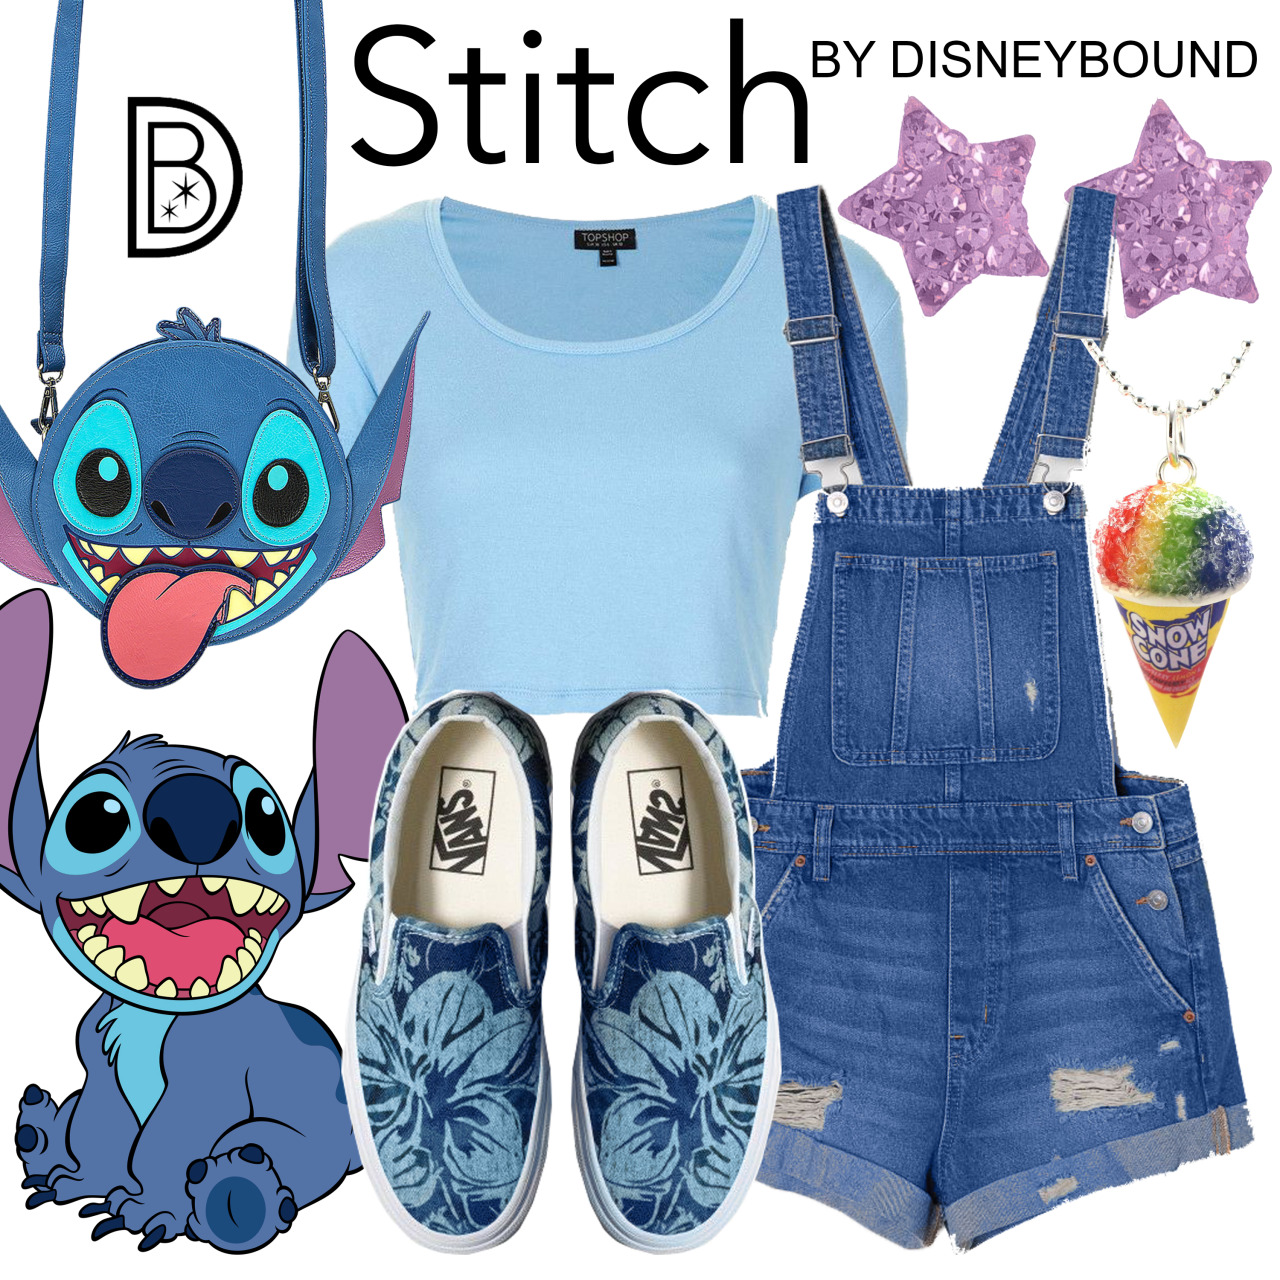 Disney bounding stitch